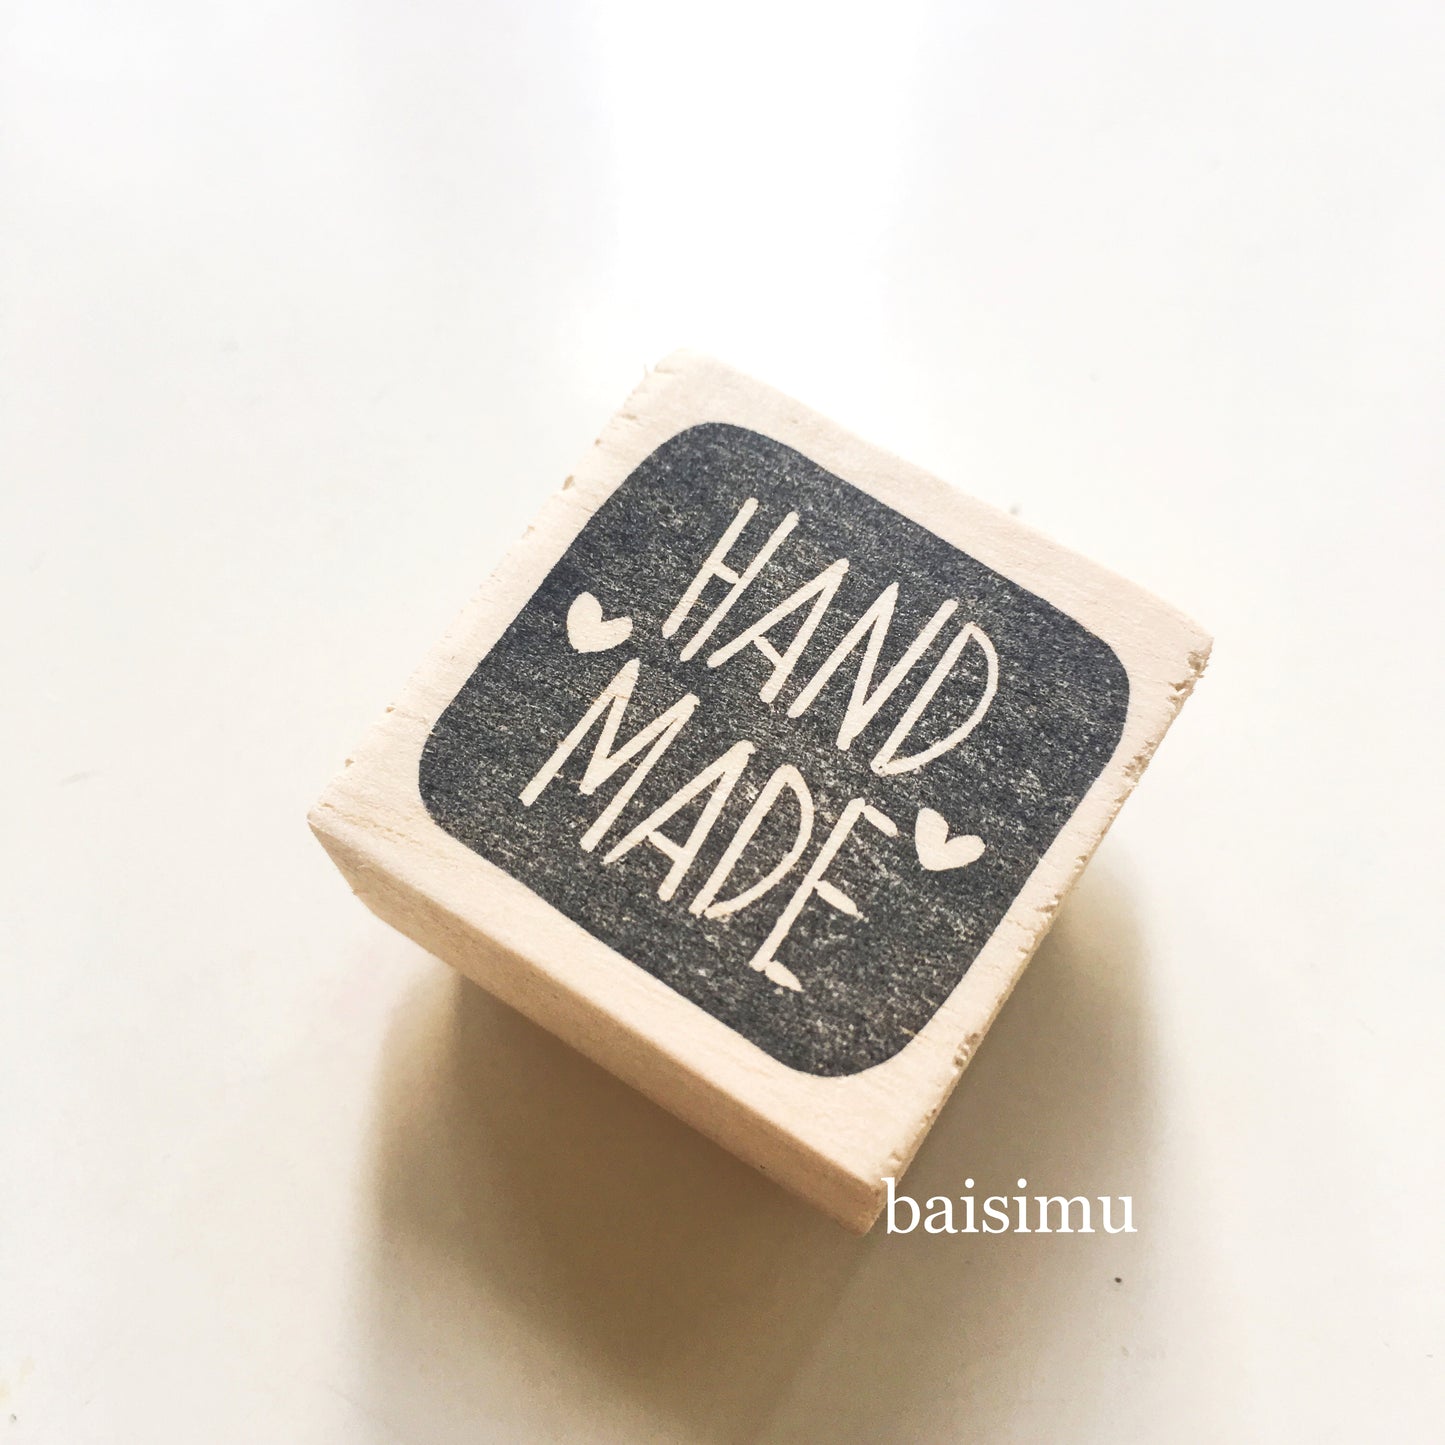 Handmade stamp